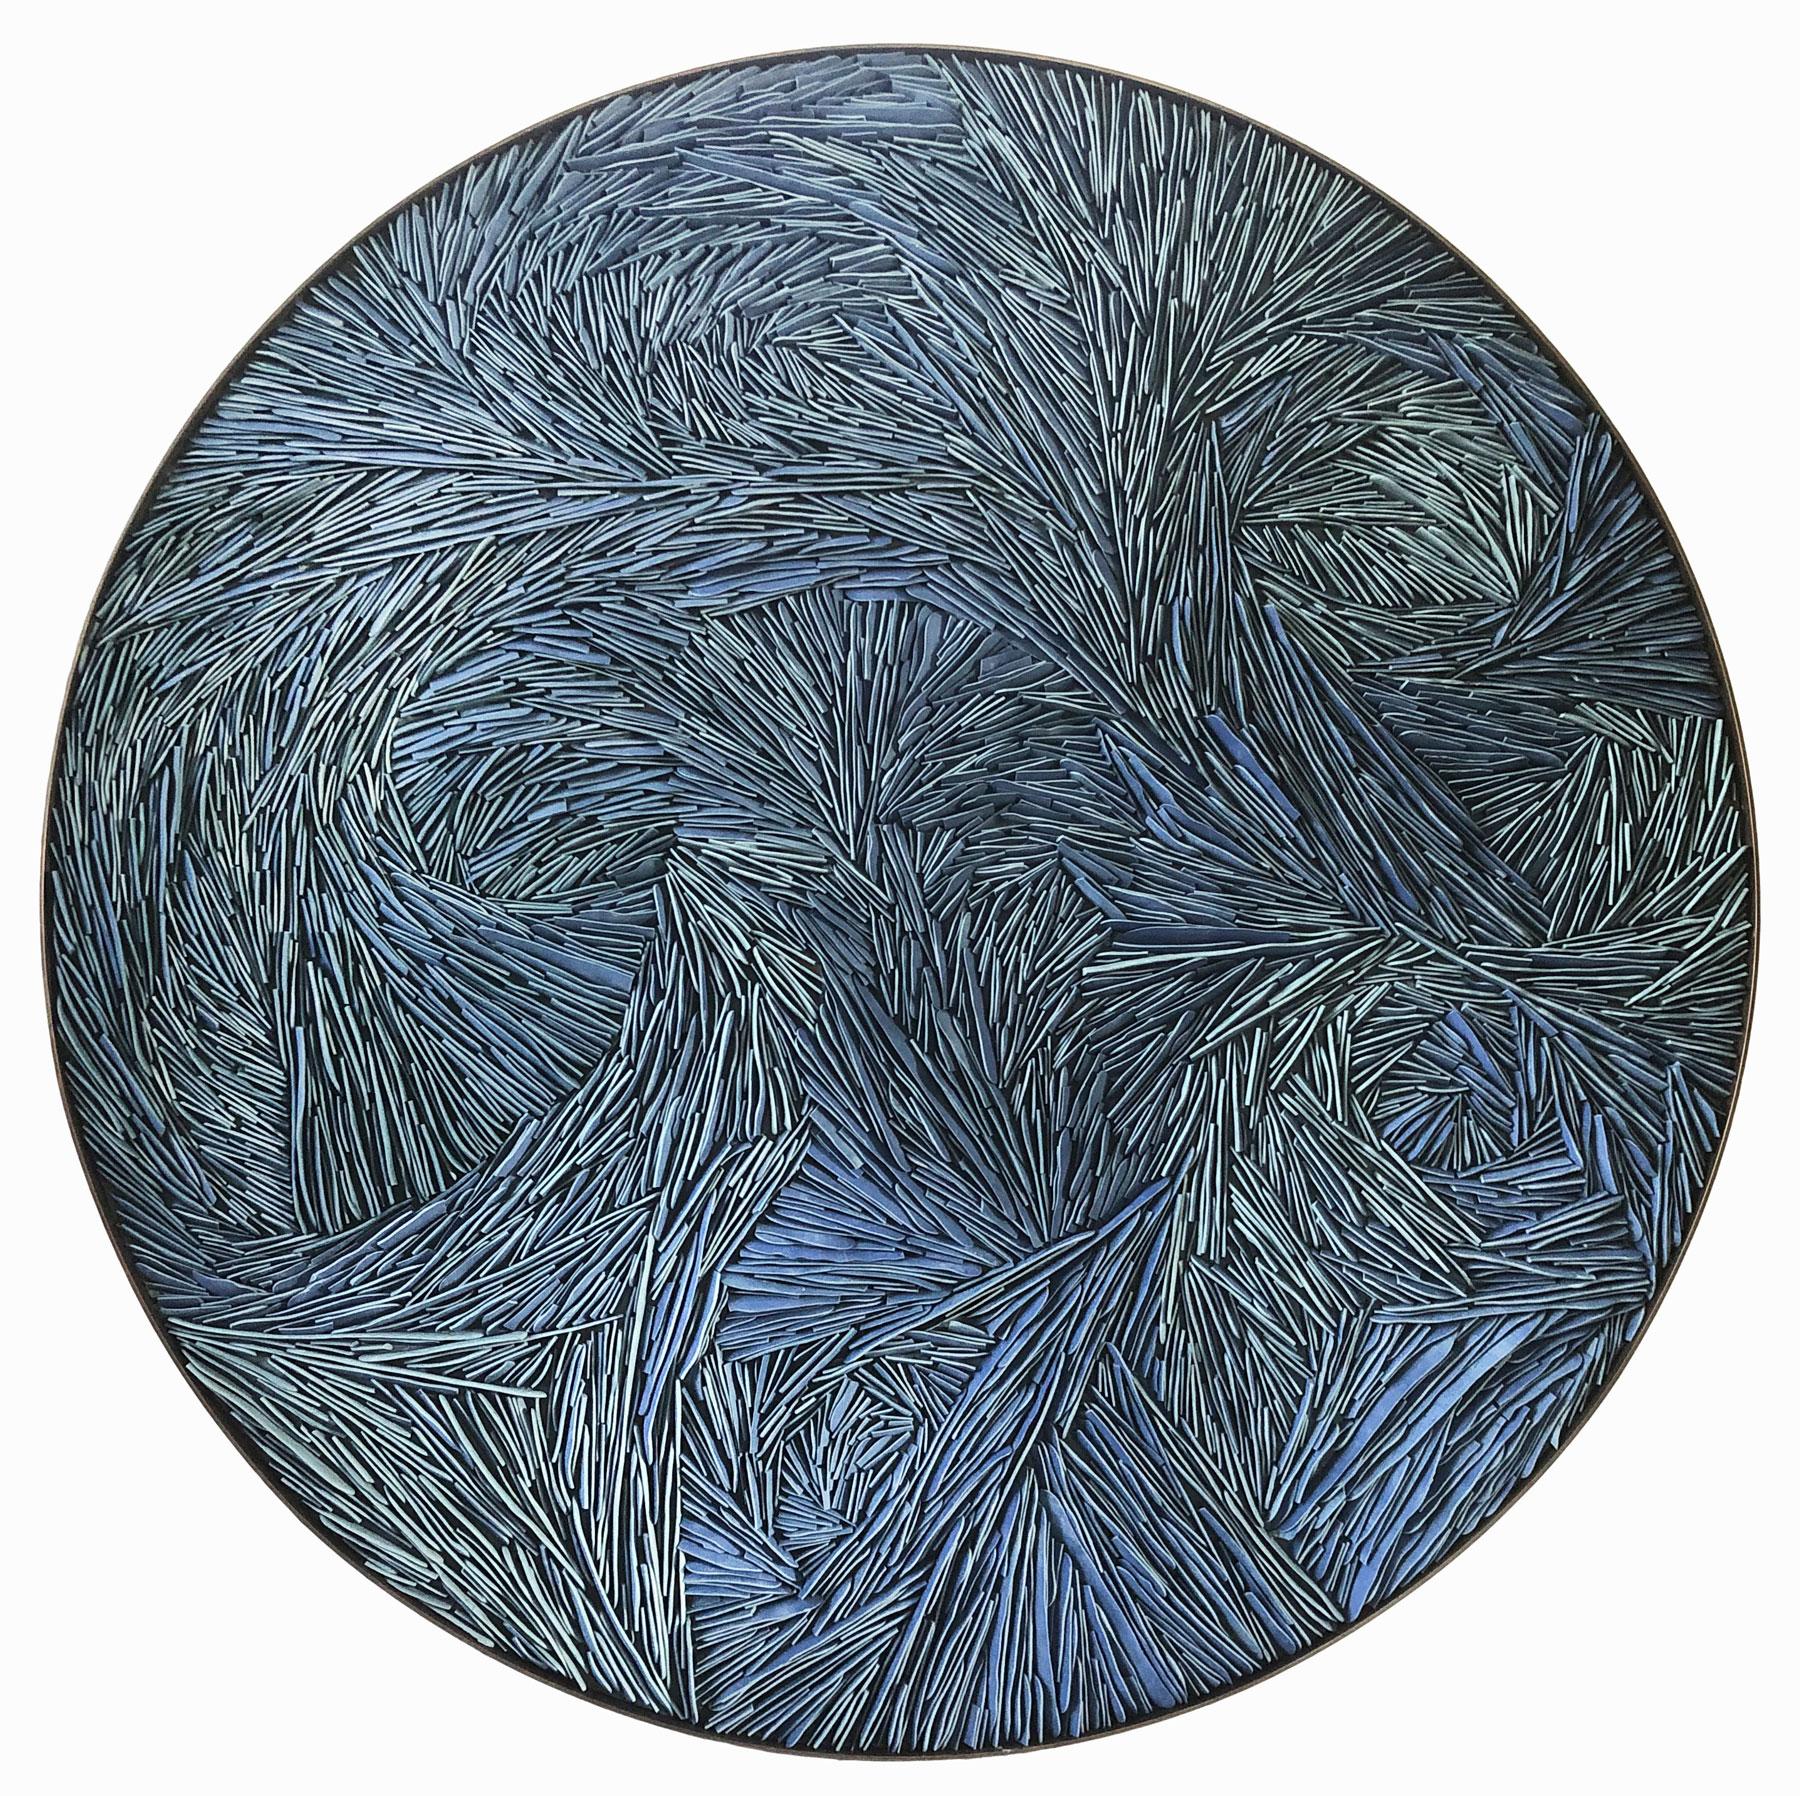 Fenella Elms
Blue Strata, 2021
Porcelain on board, framed (metal frame)
C. 39.4 in. diameter. x 2 in. d
Unique
Object No.: 3865.